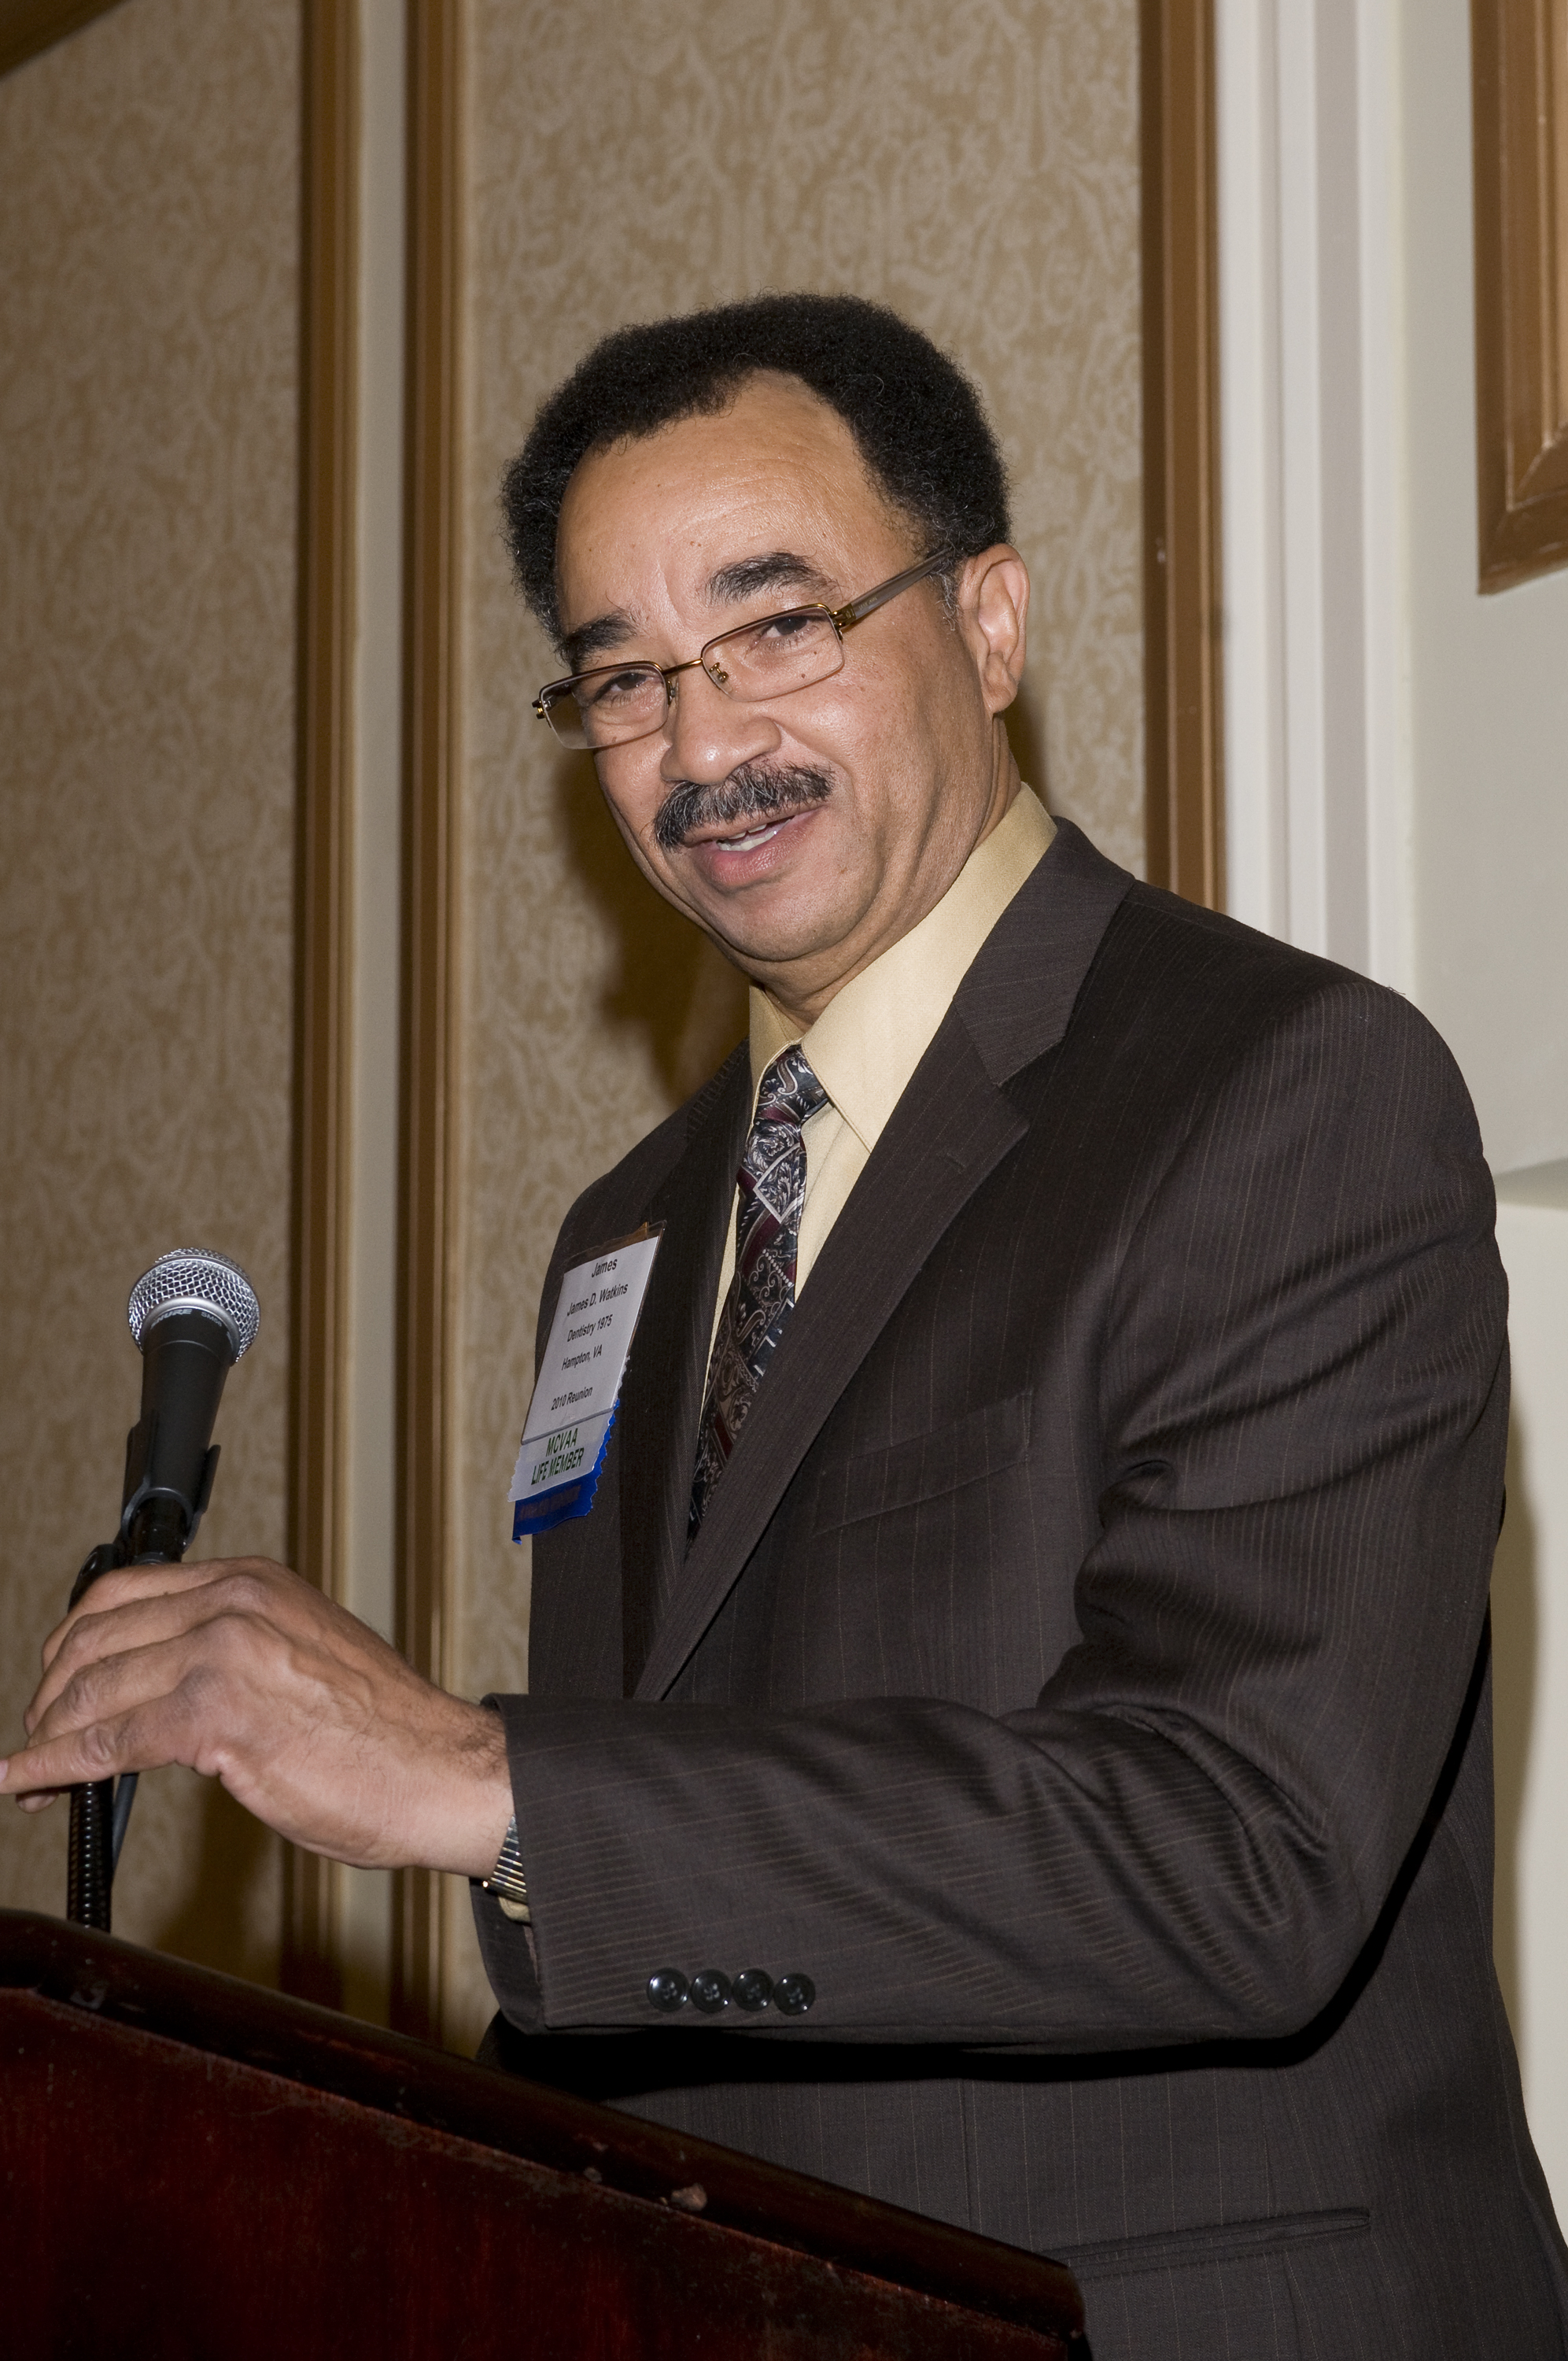 Dr. Jim Watkins